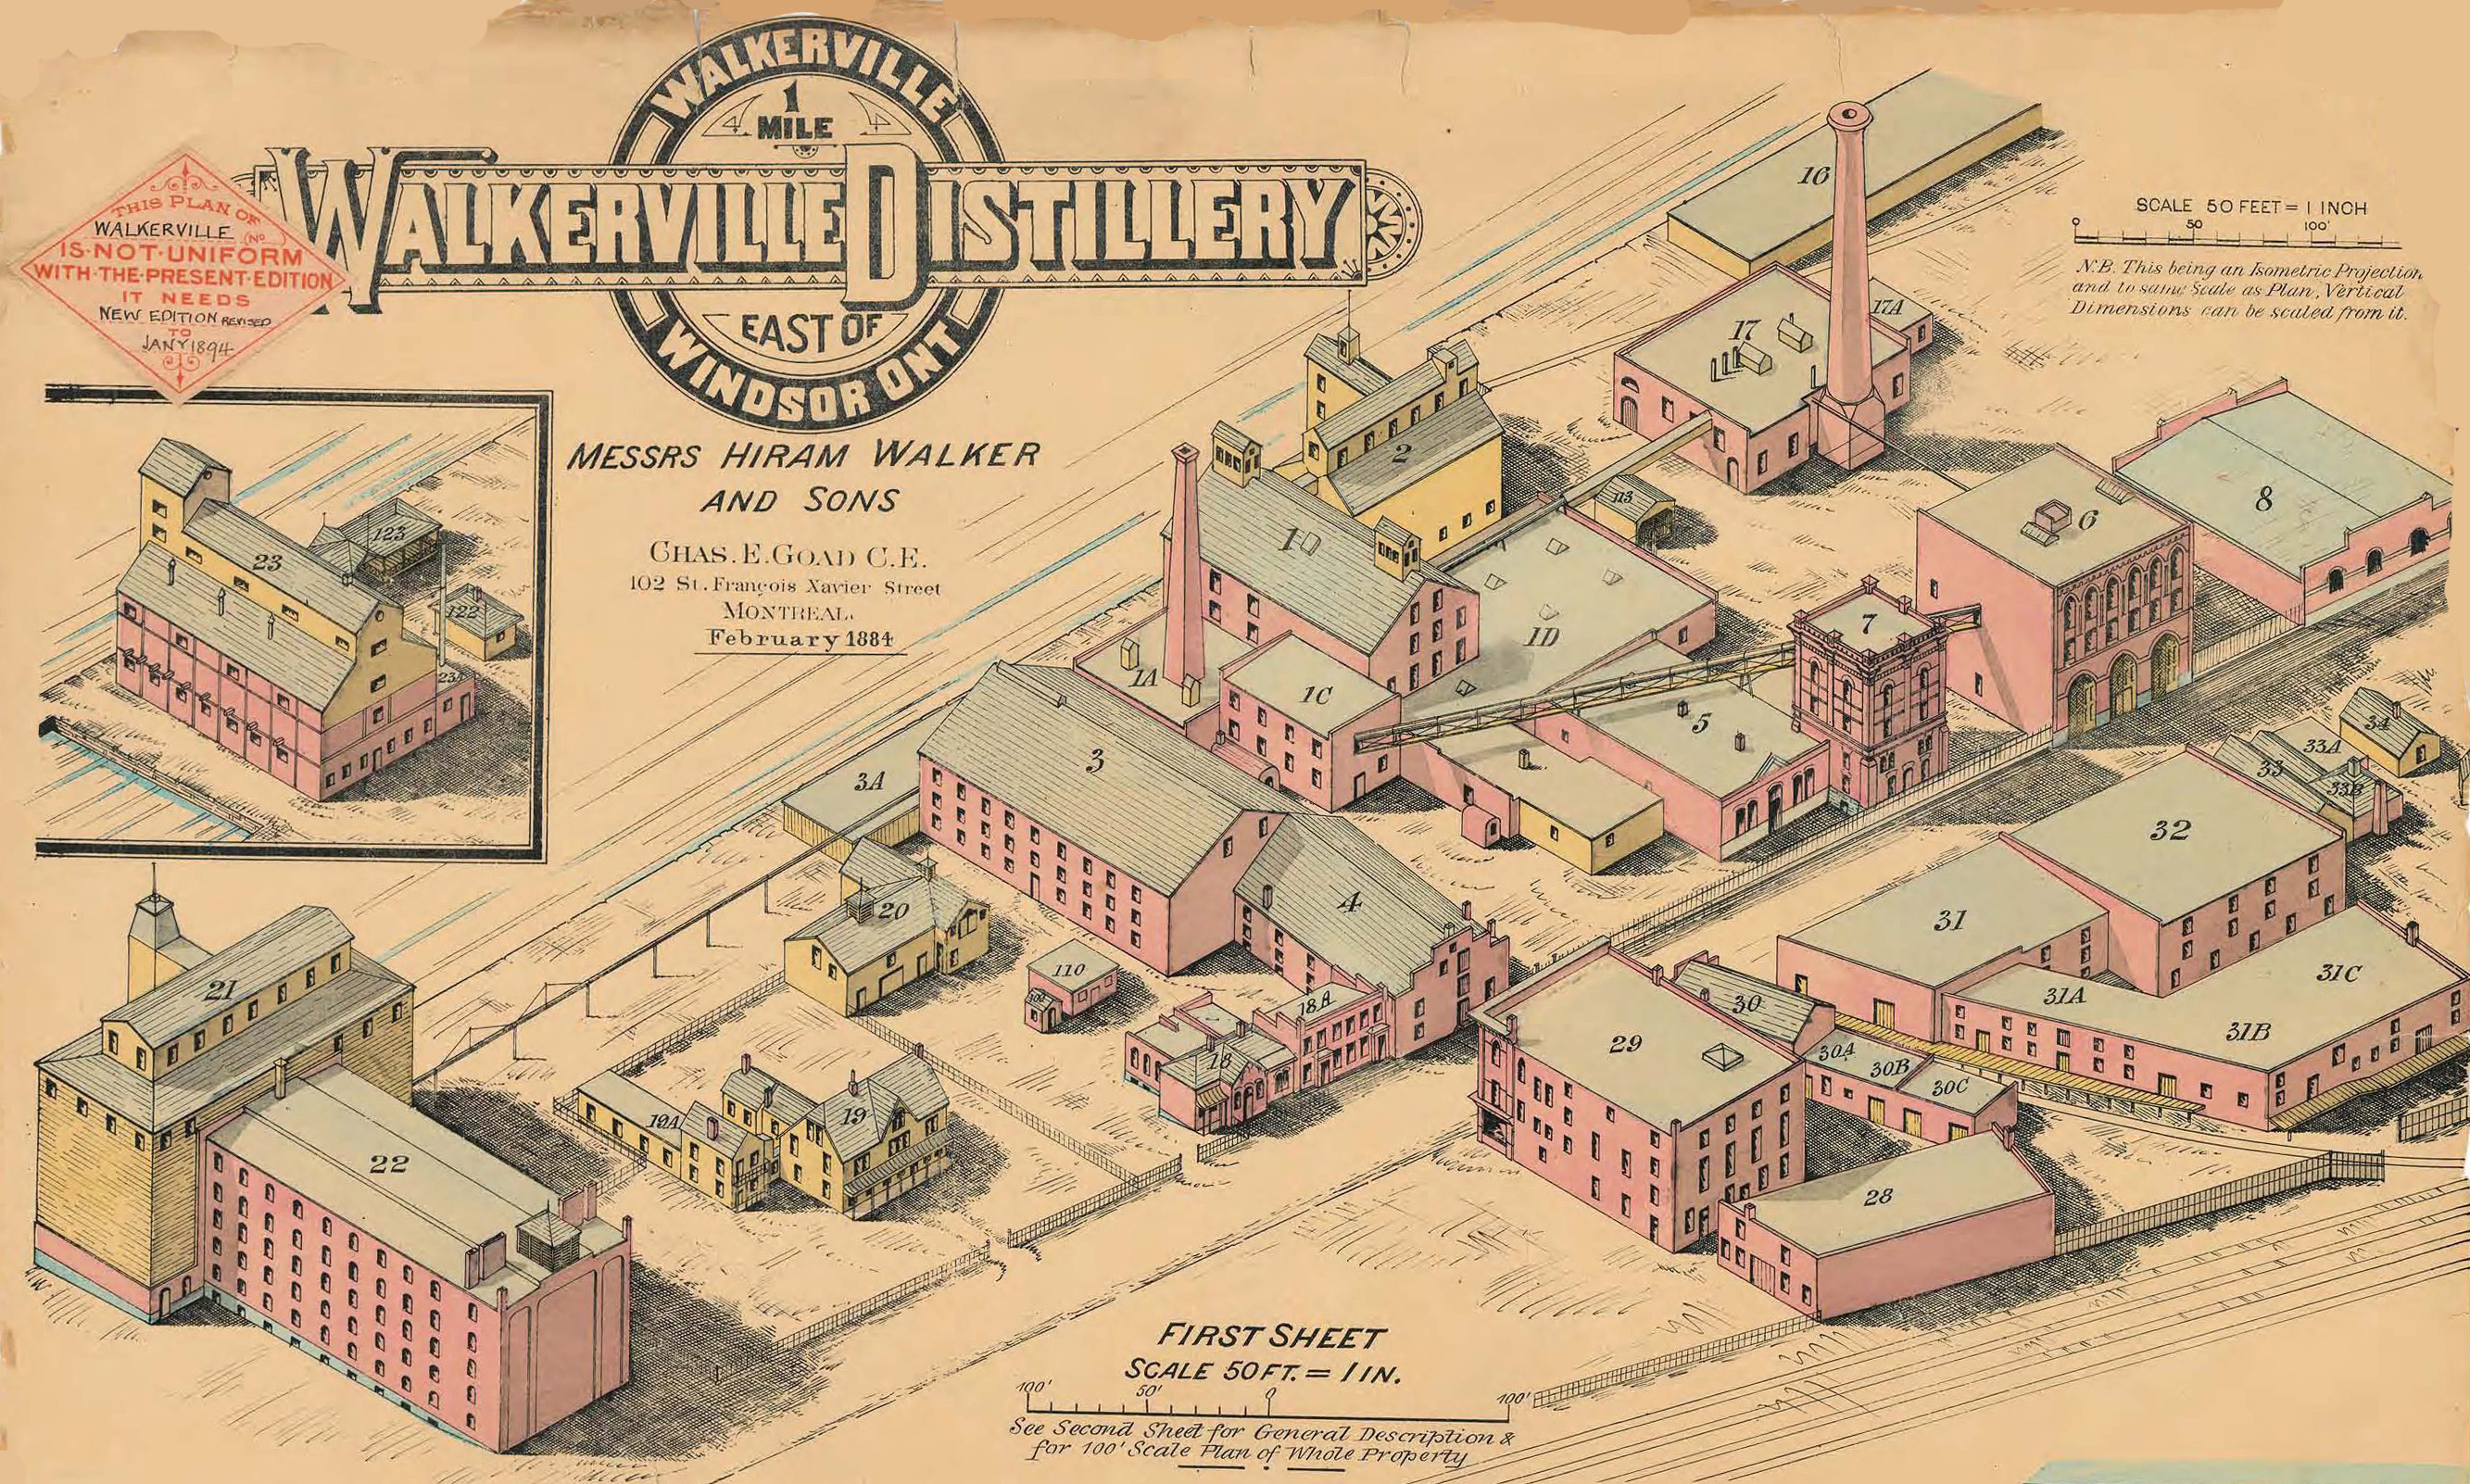 Historical artist rendering of the Walkerville Distillery buildings